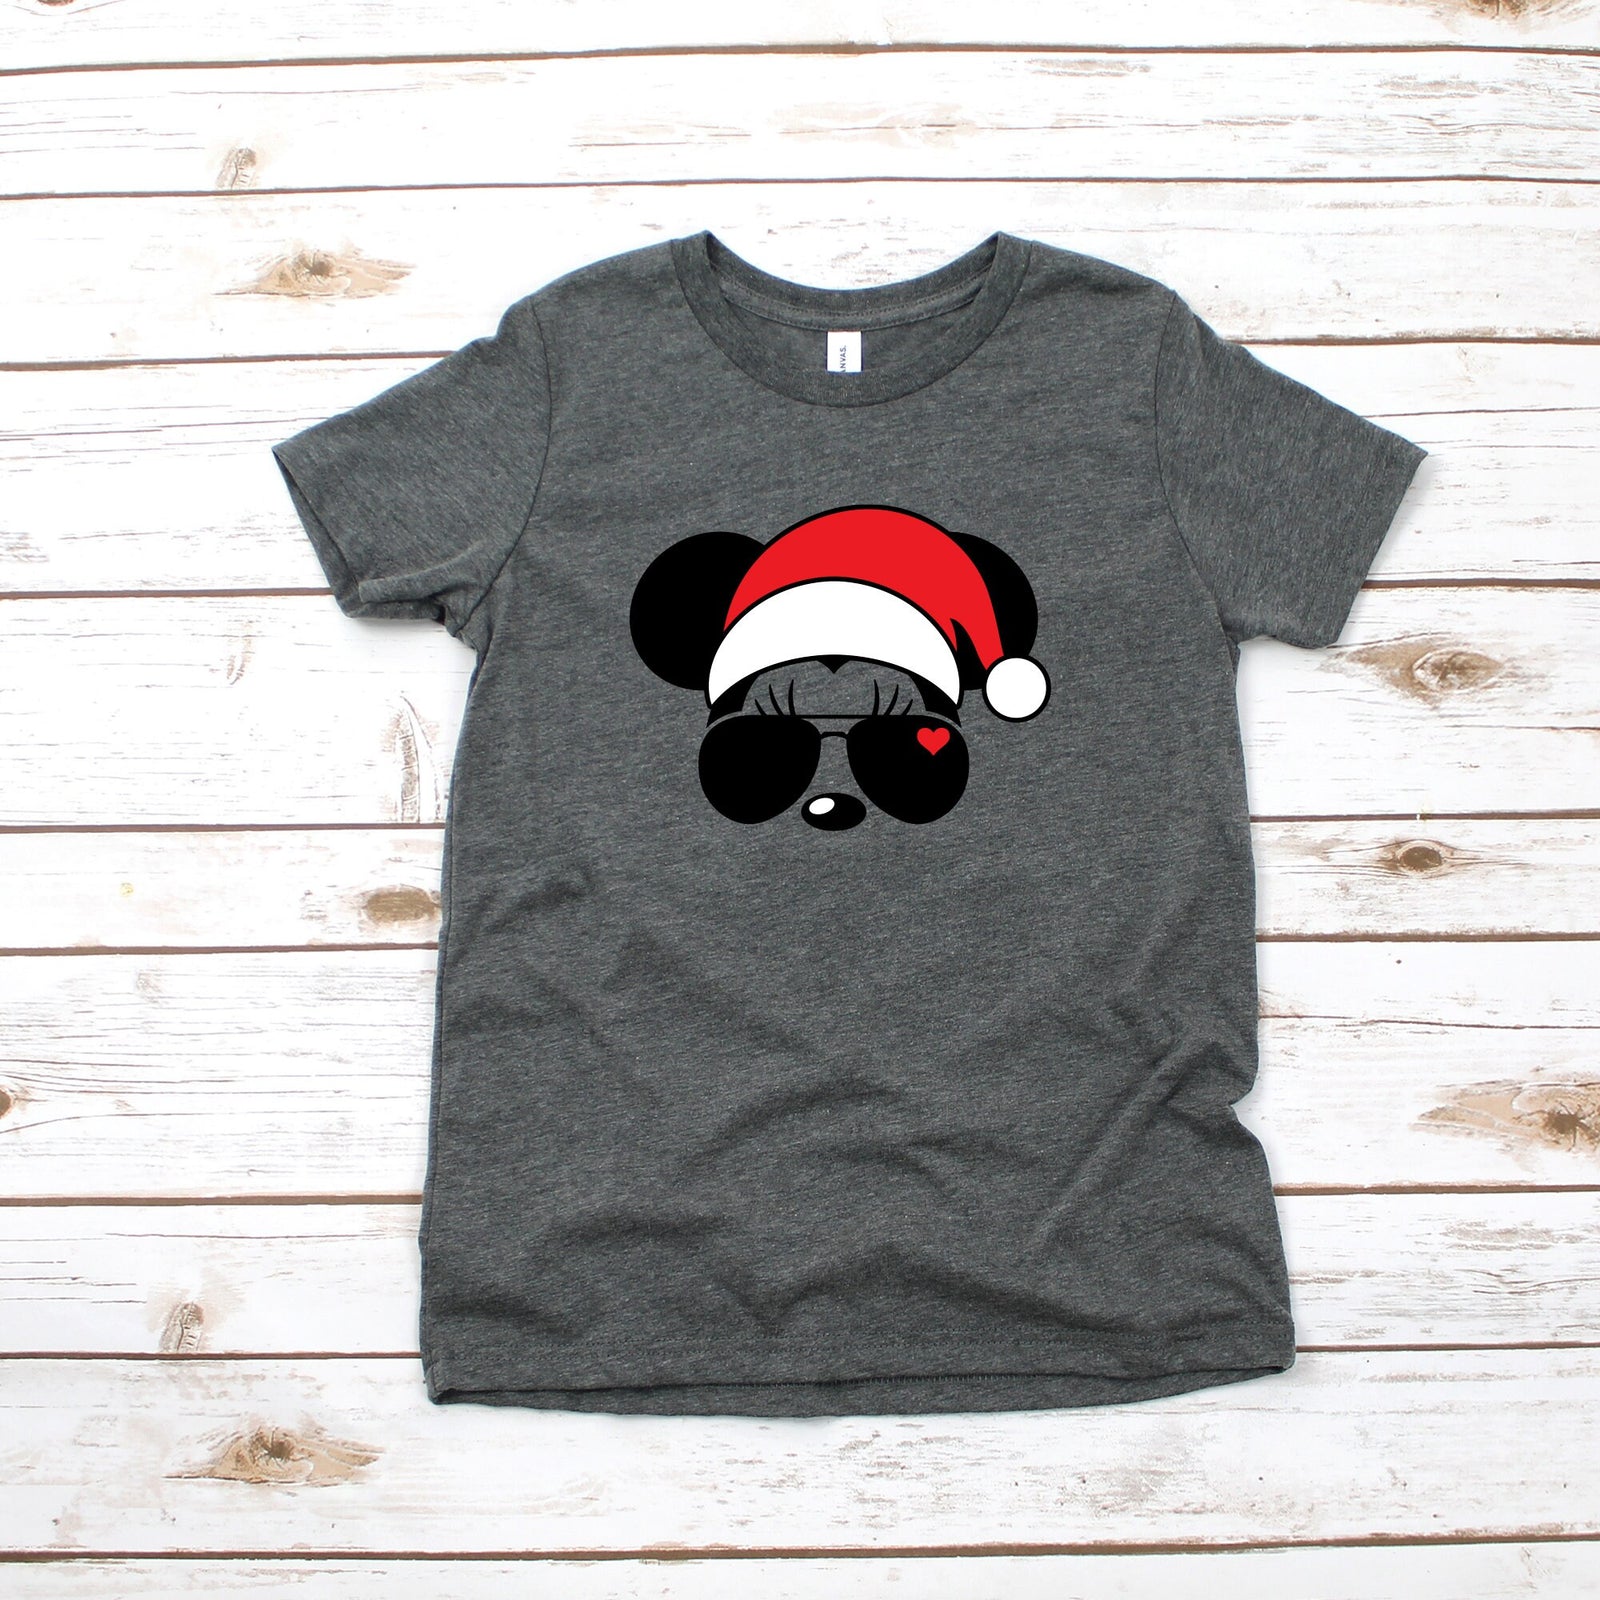 Santa Minnie Mouse - Aviator Sunglasses - Infant Toddler Youth Minnie Shirt - Disney Kids Shirts - Christmas Holiday Shirt